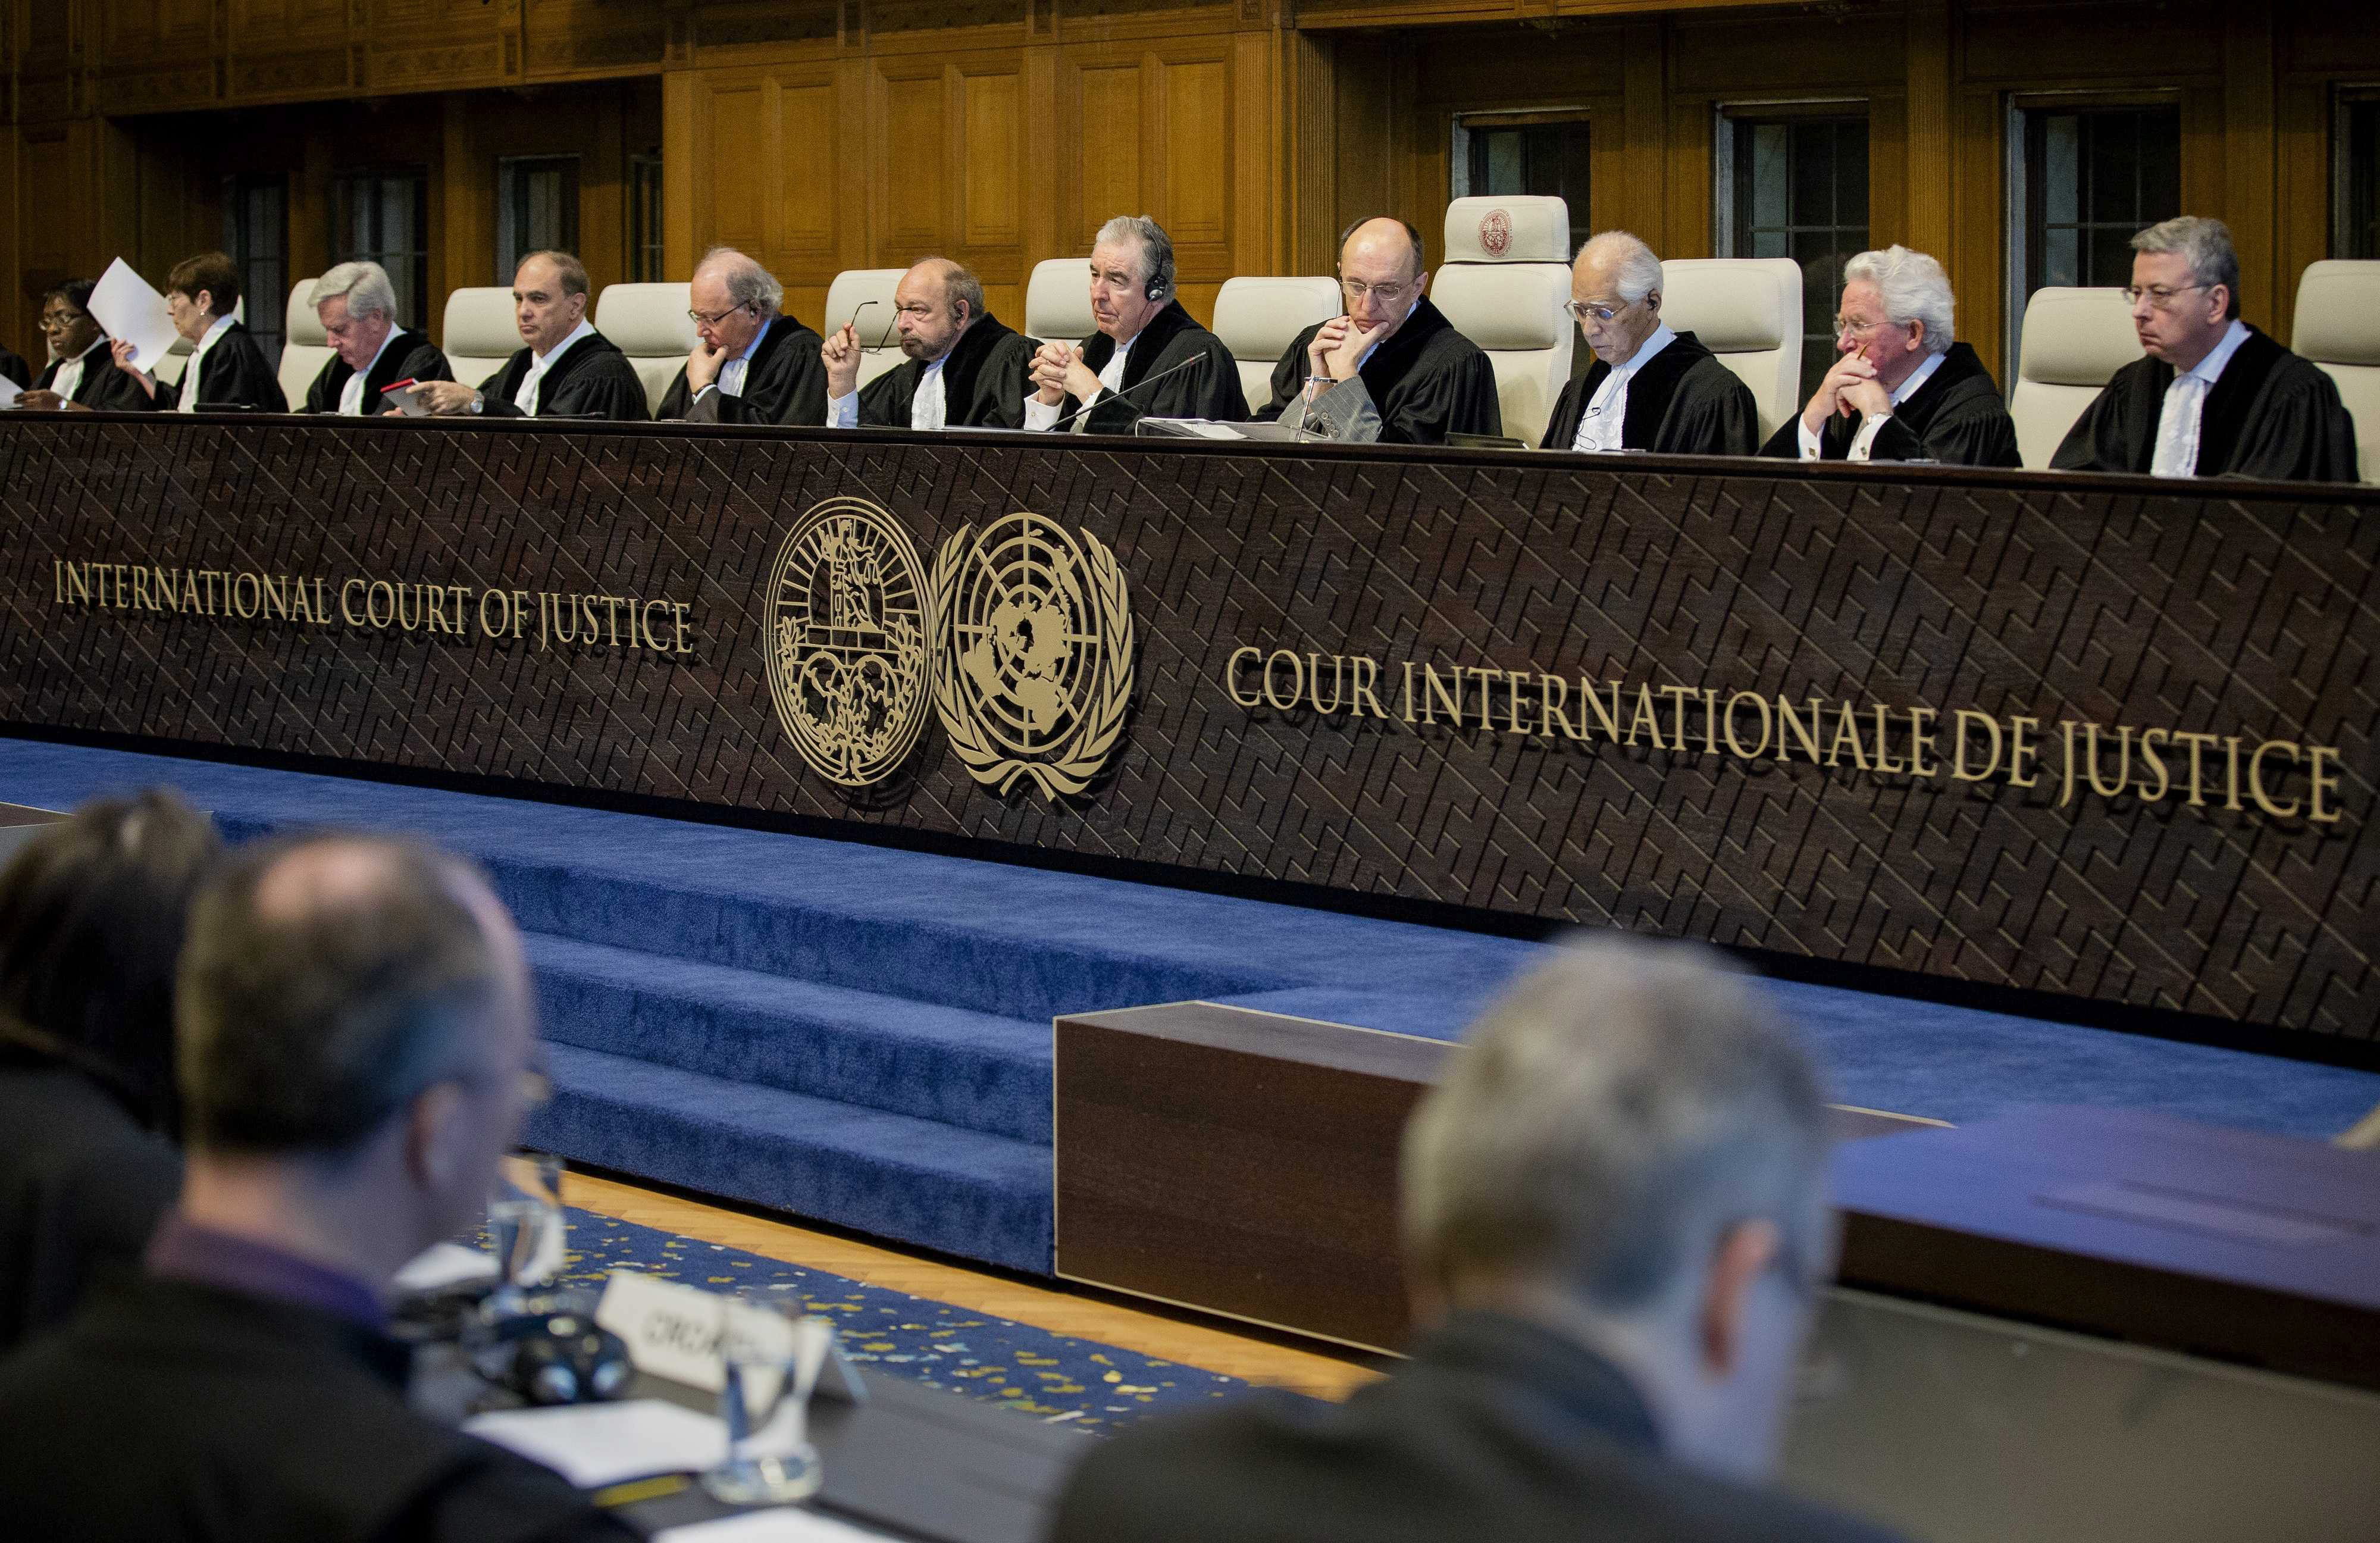 Суда гааги. Международный трибунал в Гааге. Международный Уголовный трибунал (Гаага). Суд ООН В Гааге. Международный Уголовный суд ООН.